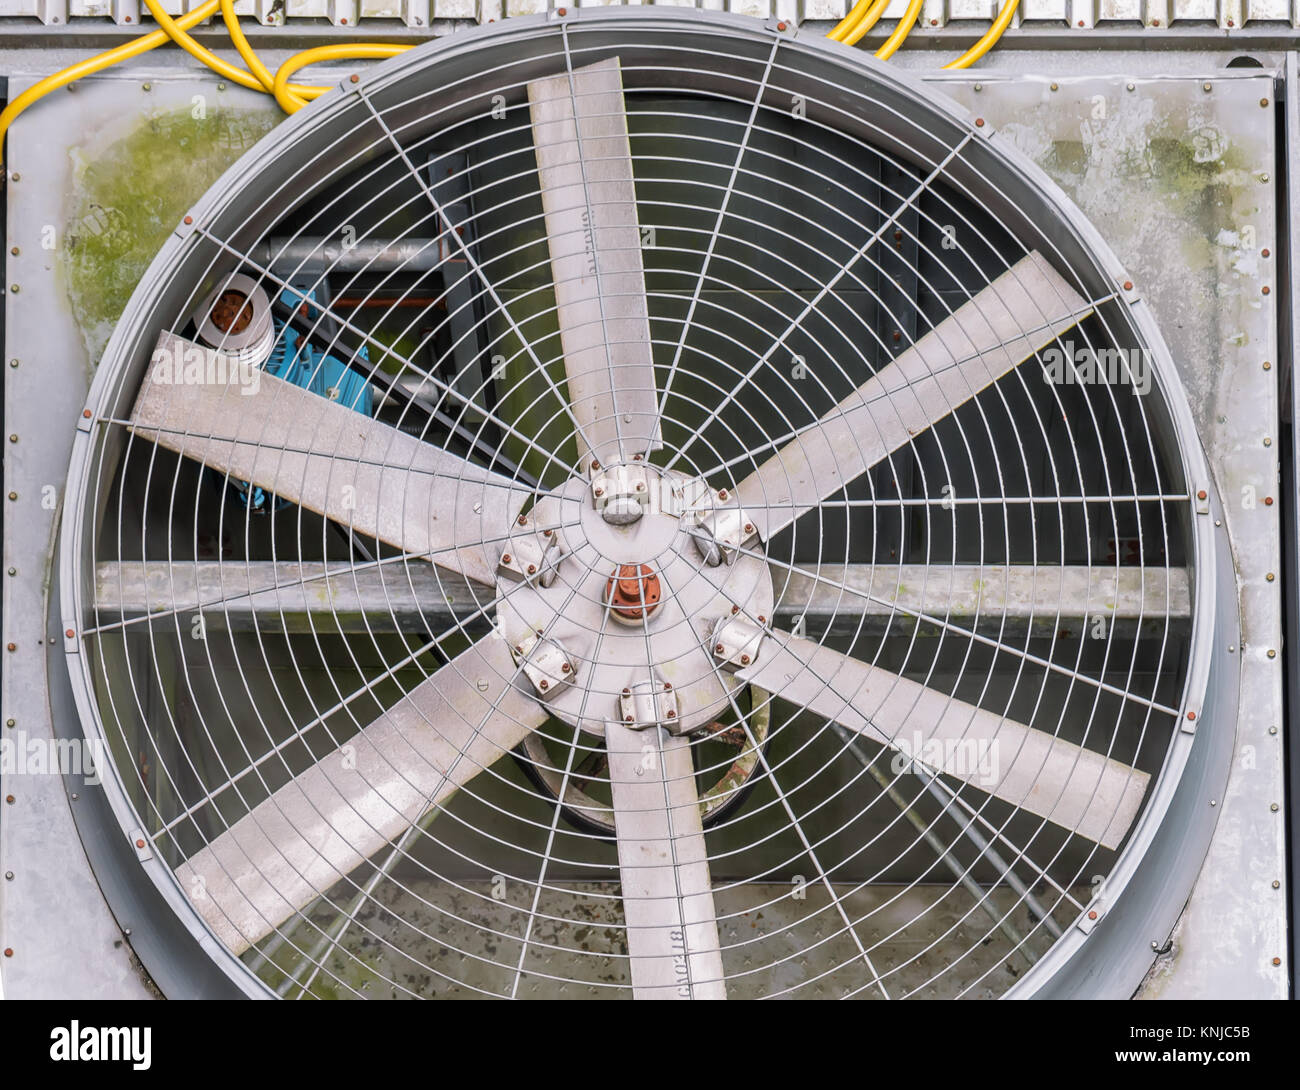 Potente e moderna, industriale ventilatori elettrici per condizionatori d'aria, close up Foto Stock